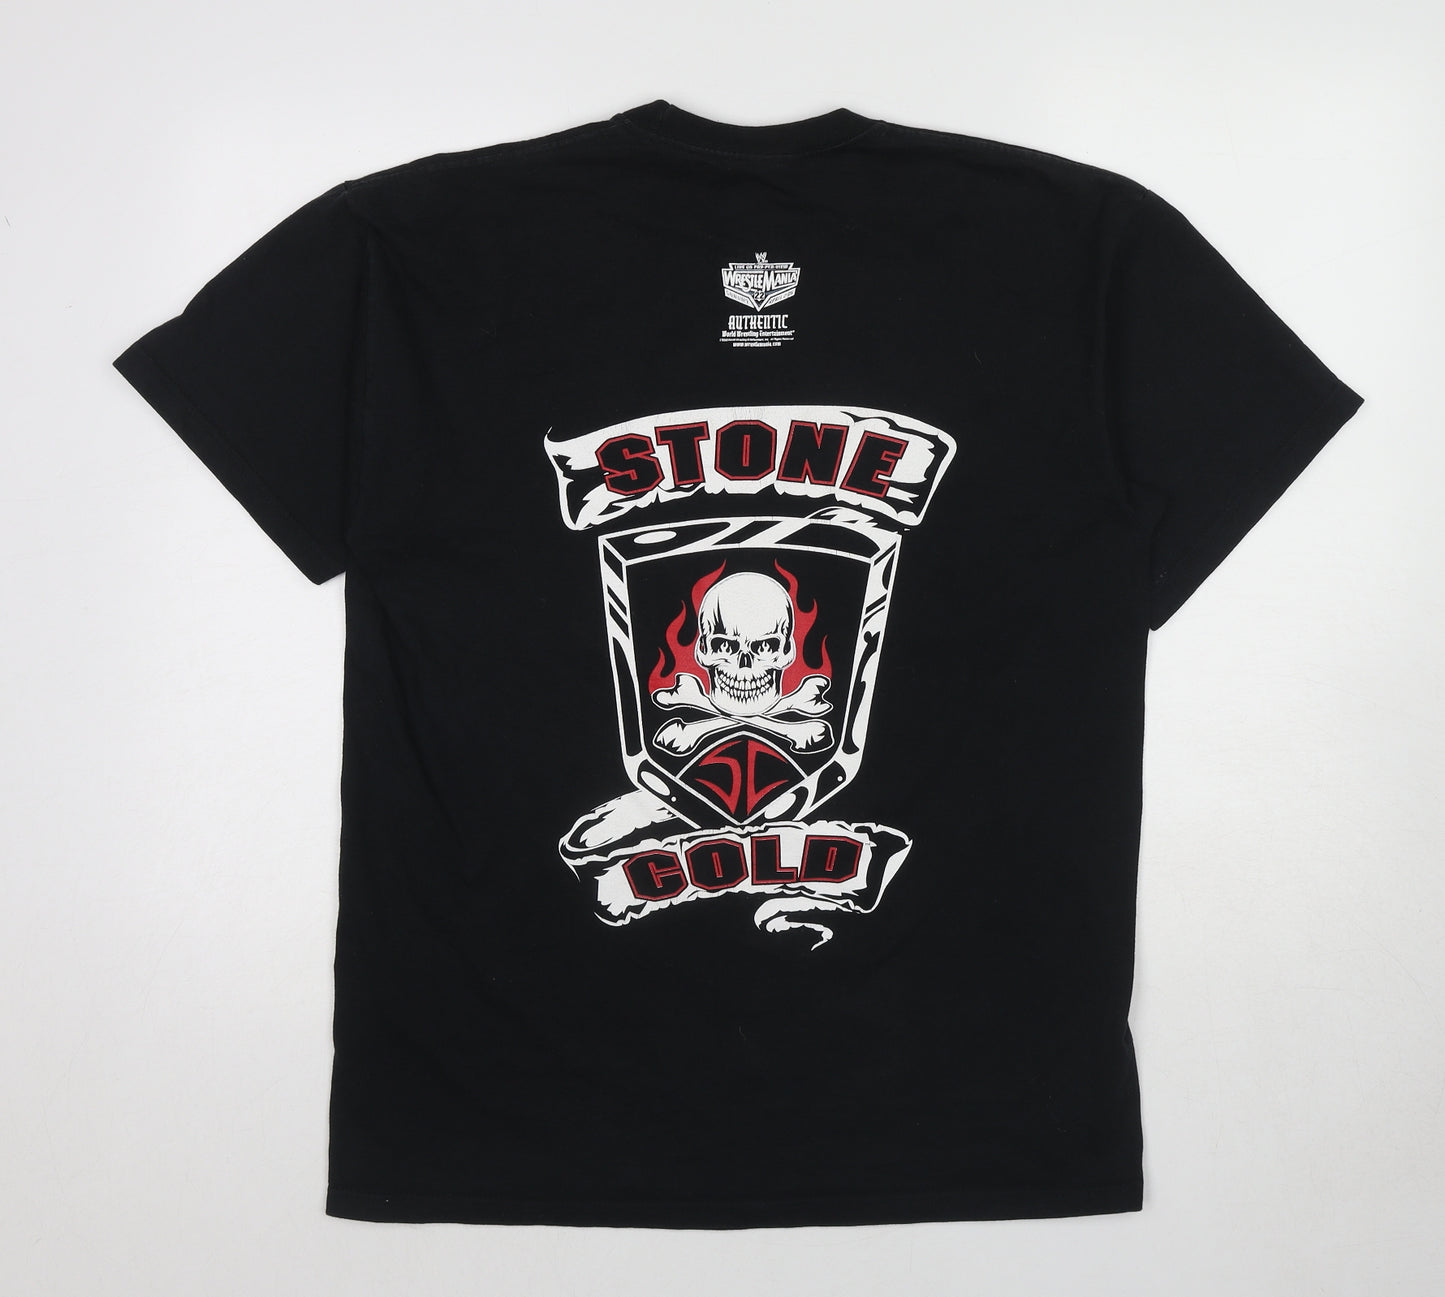 Wrestlemania Mens Black Cotton T-Shirt Size L Round Neck - Stone Cold